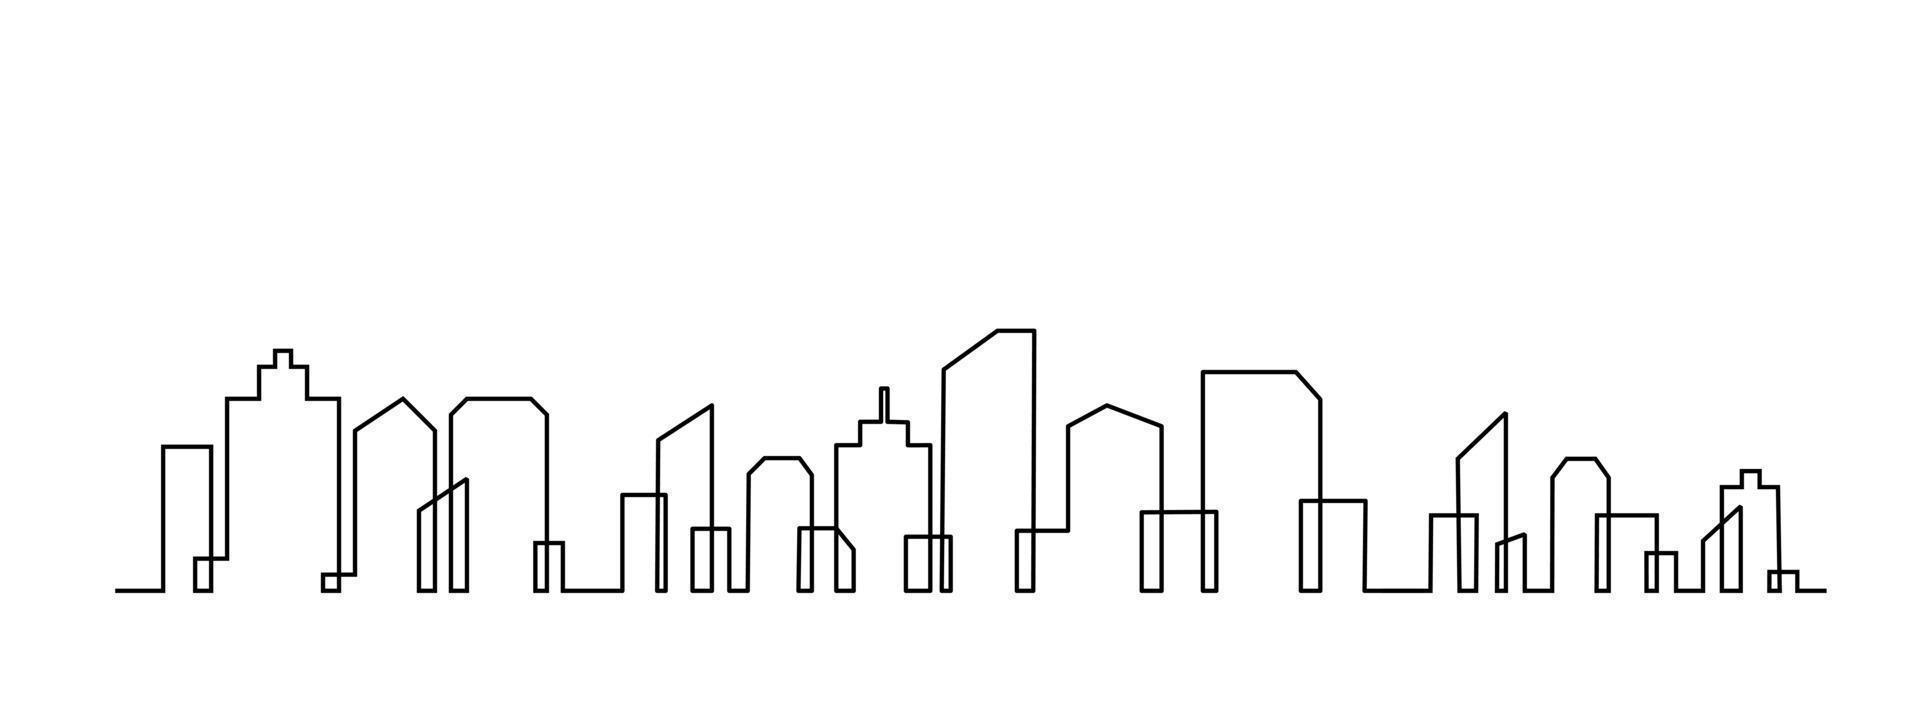 vektor-illustrationsdesign der skyline der stadt vektor